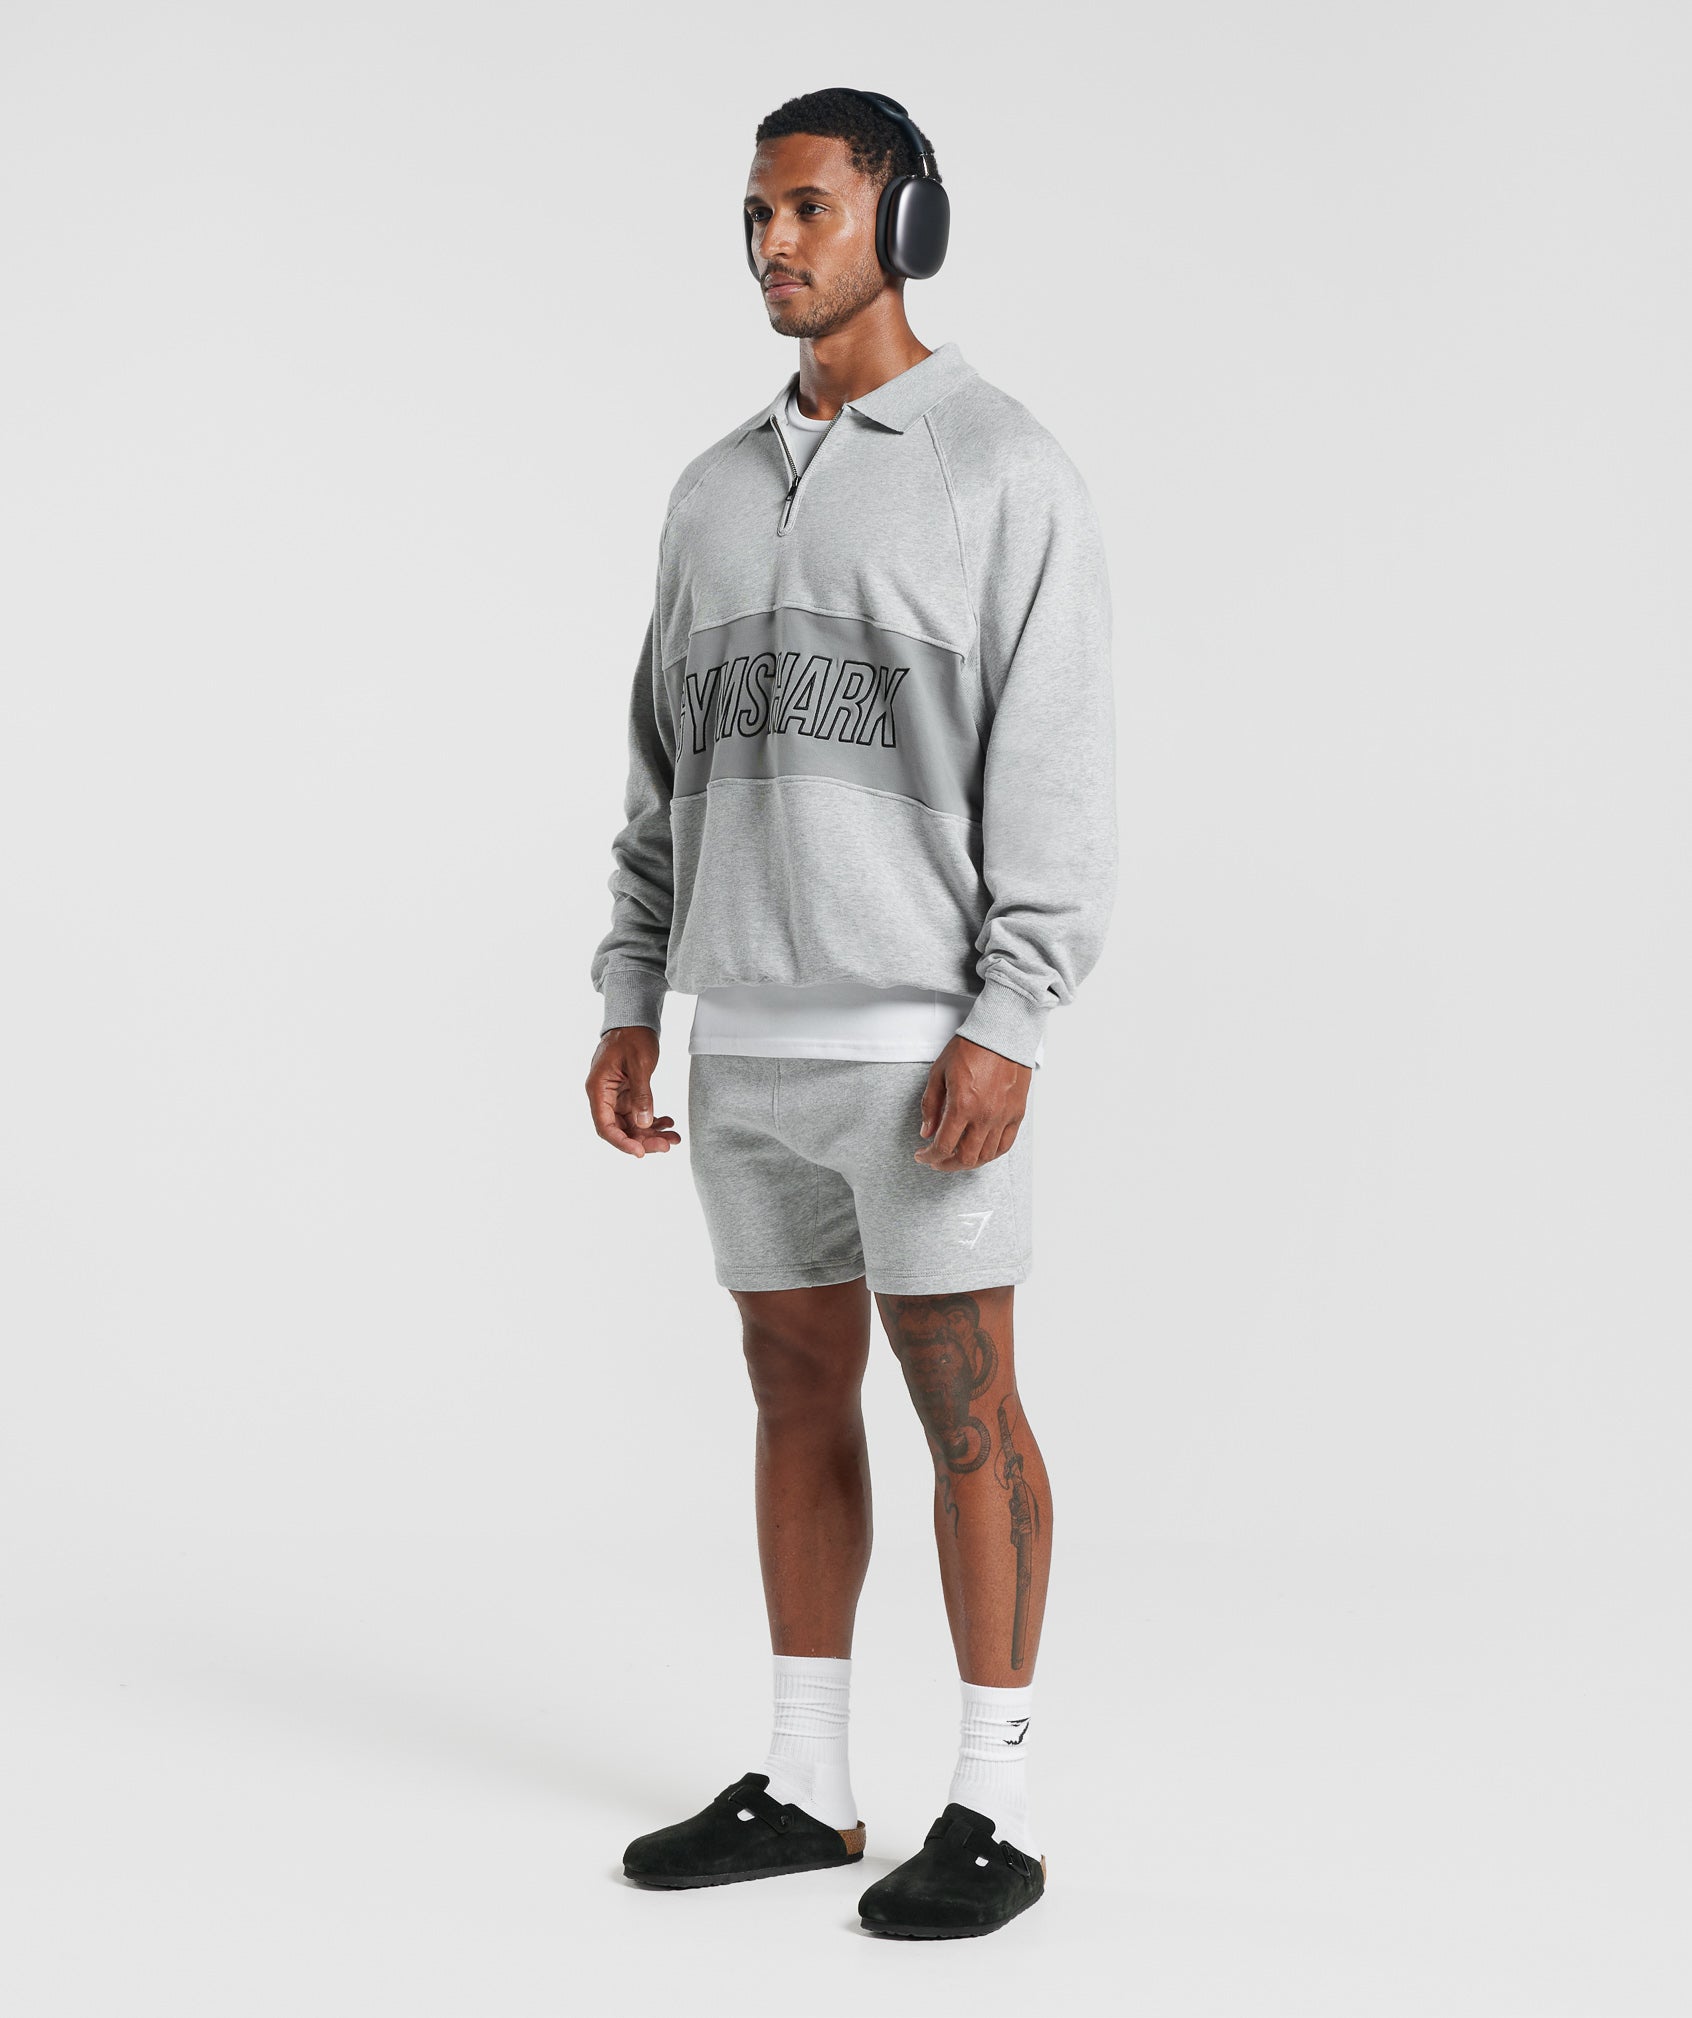 Rest Day Essentials Sweatshirt Polo in Light Grey Core Marl/Smokey Grey - view 4